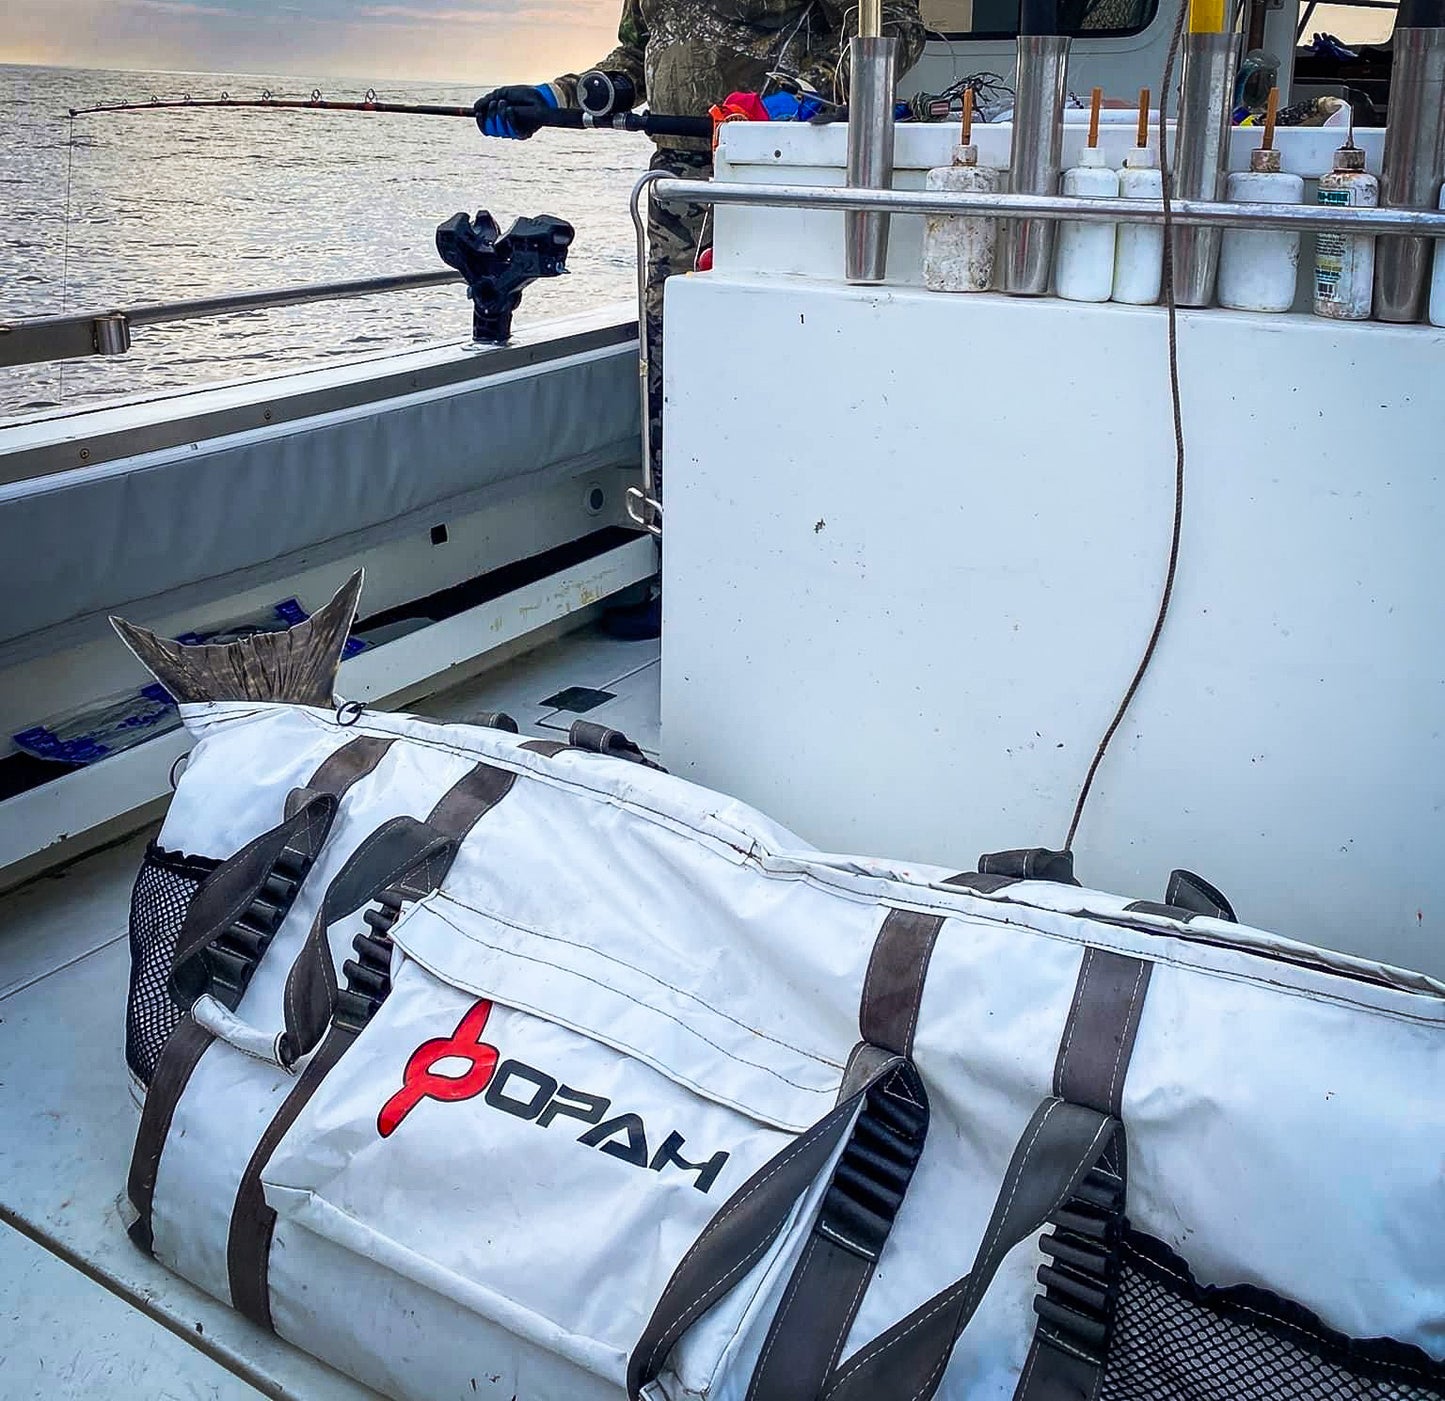 Fathom 7 Insulated Cooler Bag, Cow Tuna 82L x 30W x 36H – Opah Gear Fishing  Bags